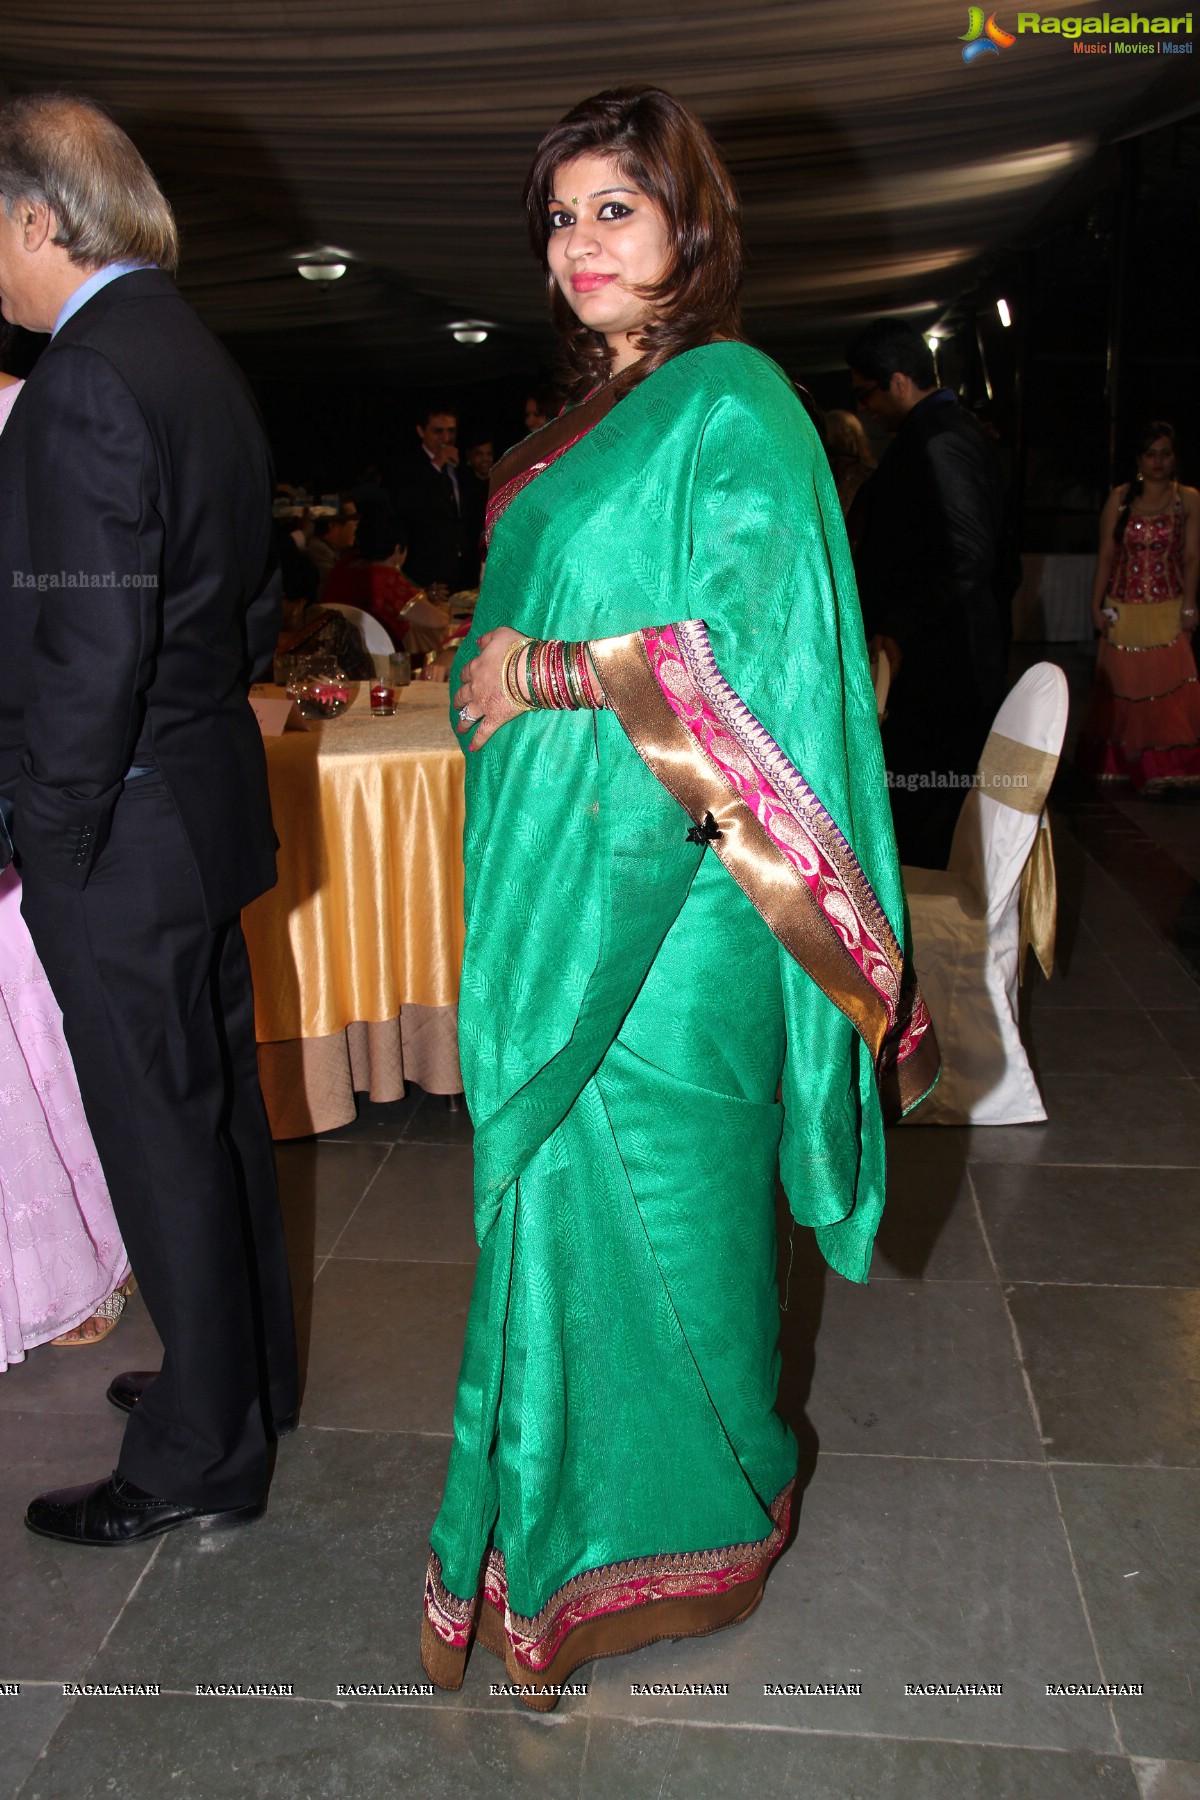 Sumair-Lizeth Wedding Reception & Shiv-Radhika Ring Ceremony